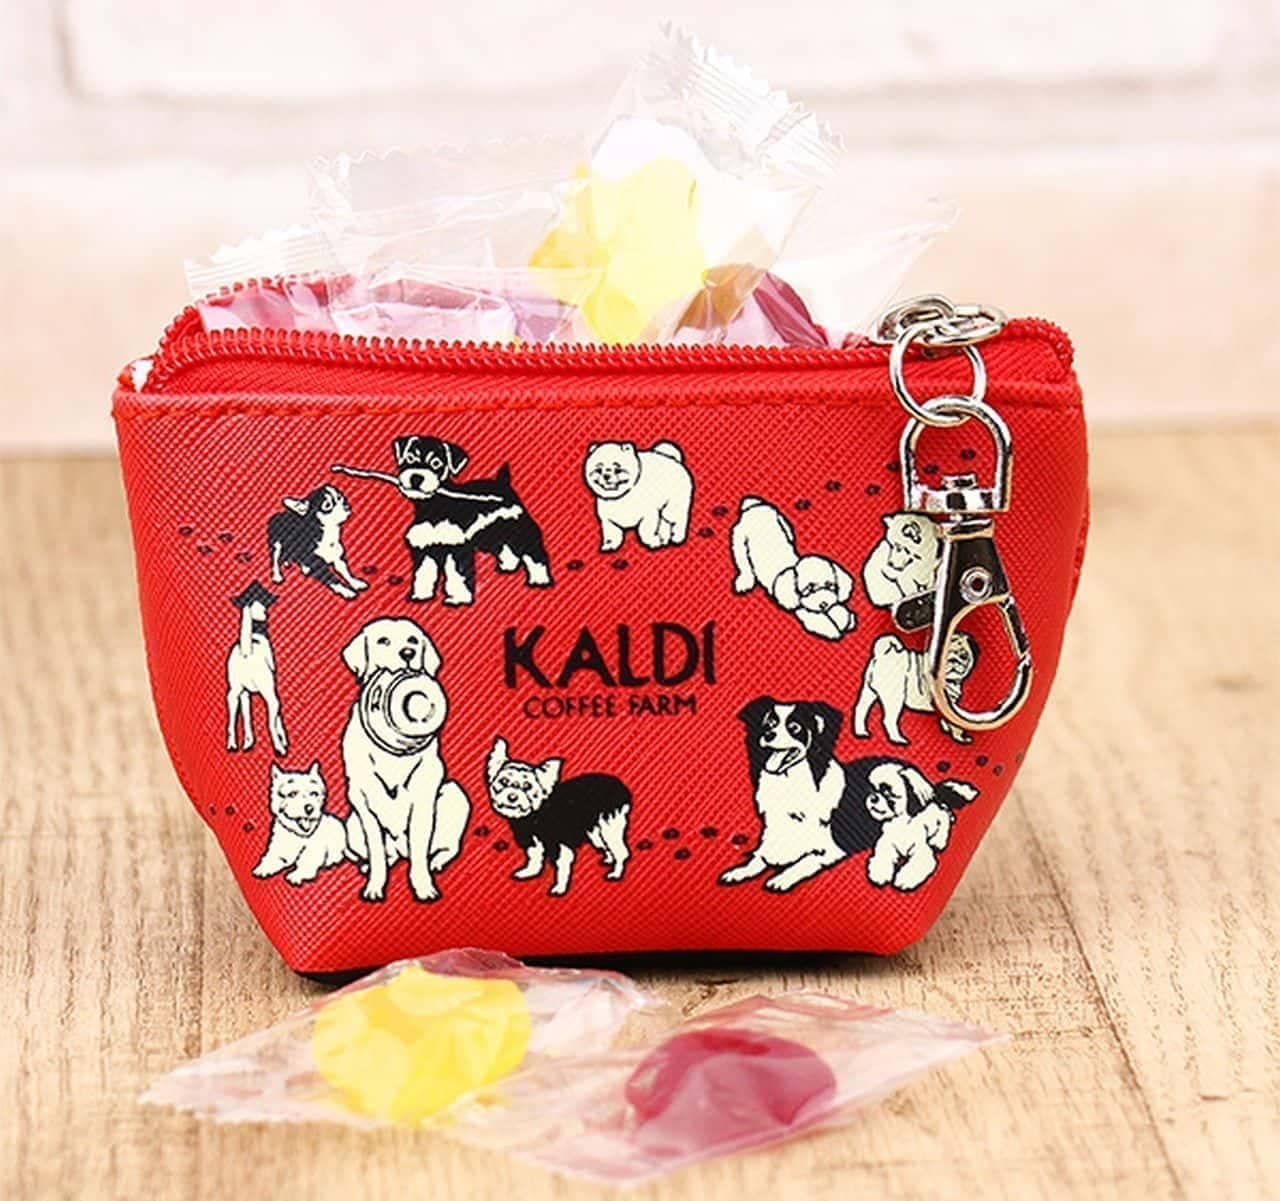 KALDI "KALDI Original Dog Mini Mini Pouch"